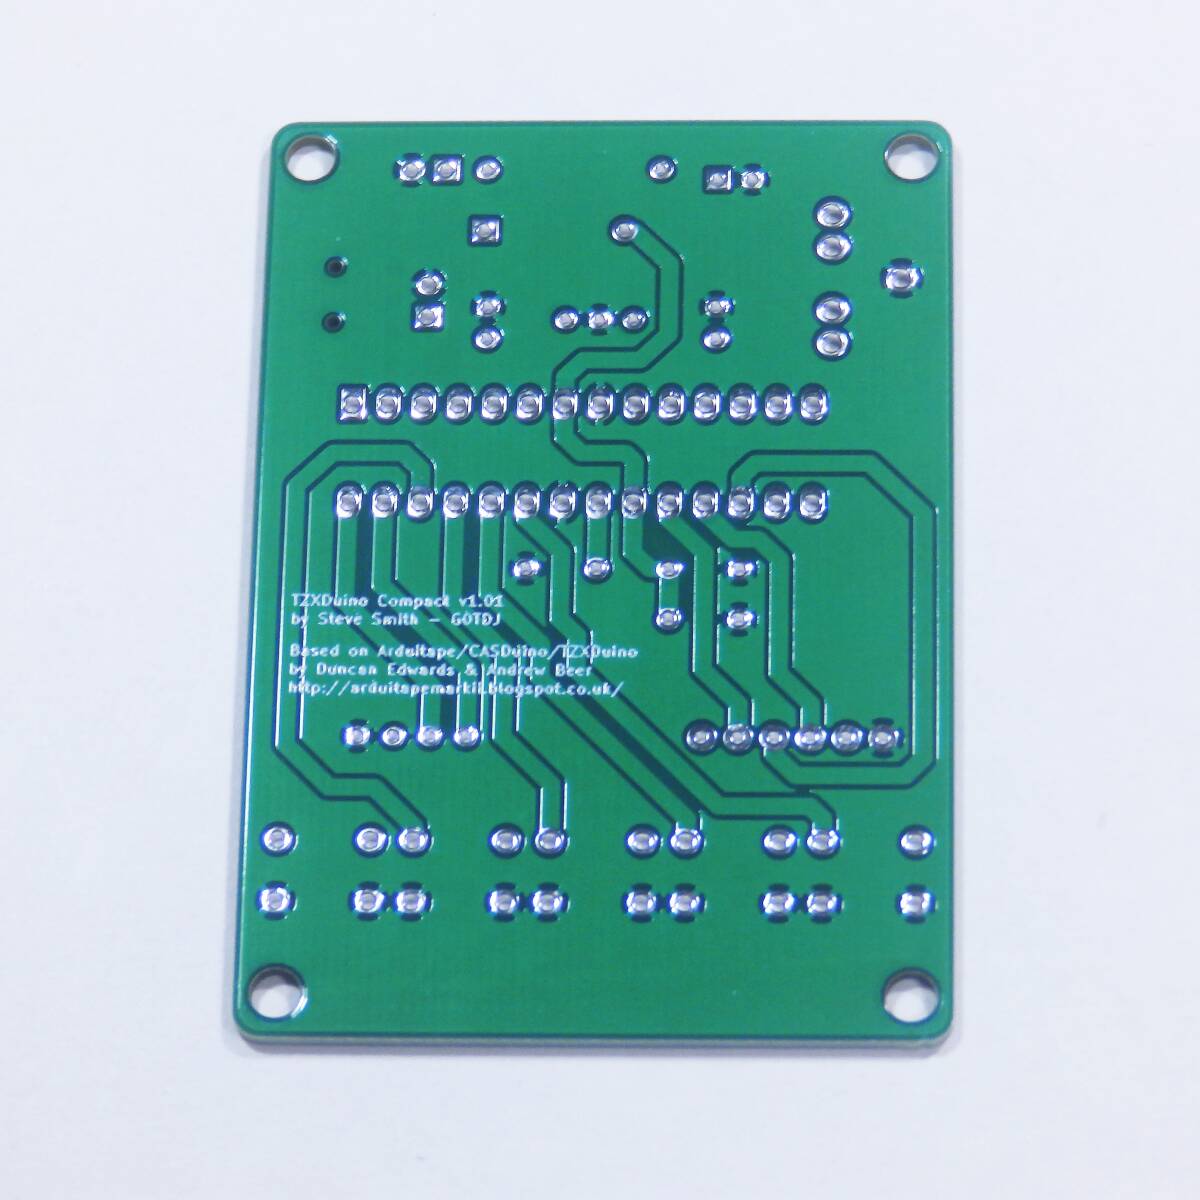 TZXDuino Compact v1.01 basis board green color sink re aspect laTAP TZX ATMEGA328 SD1306 micro SD card data recorder retro PC eb9e4